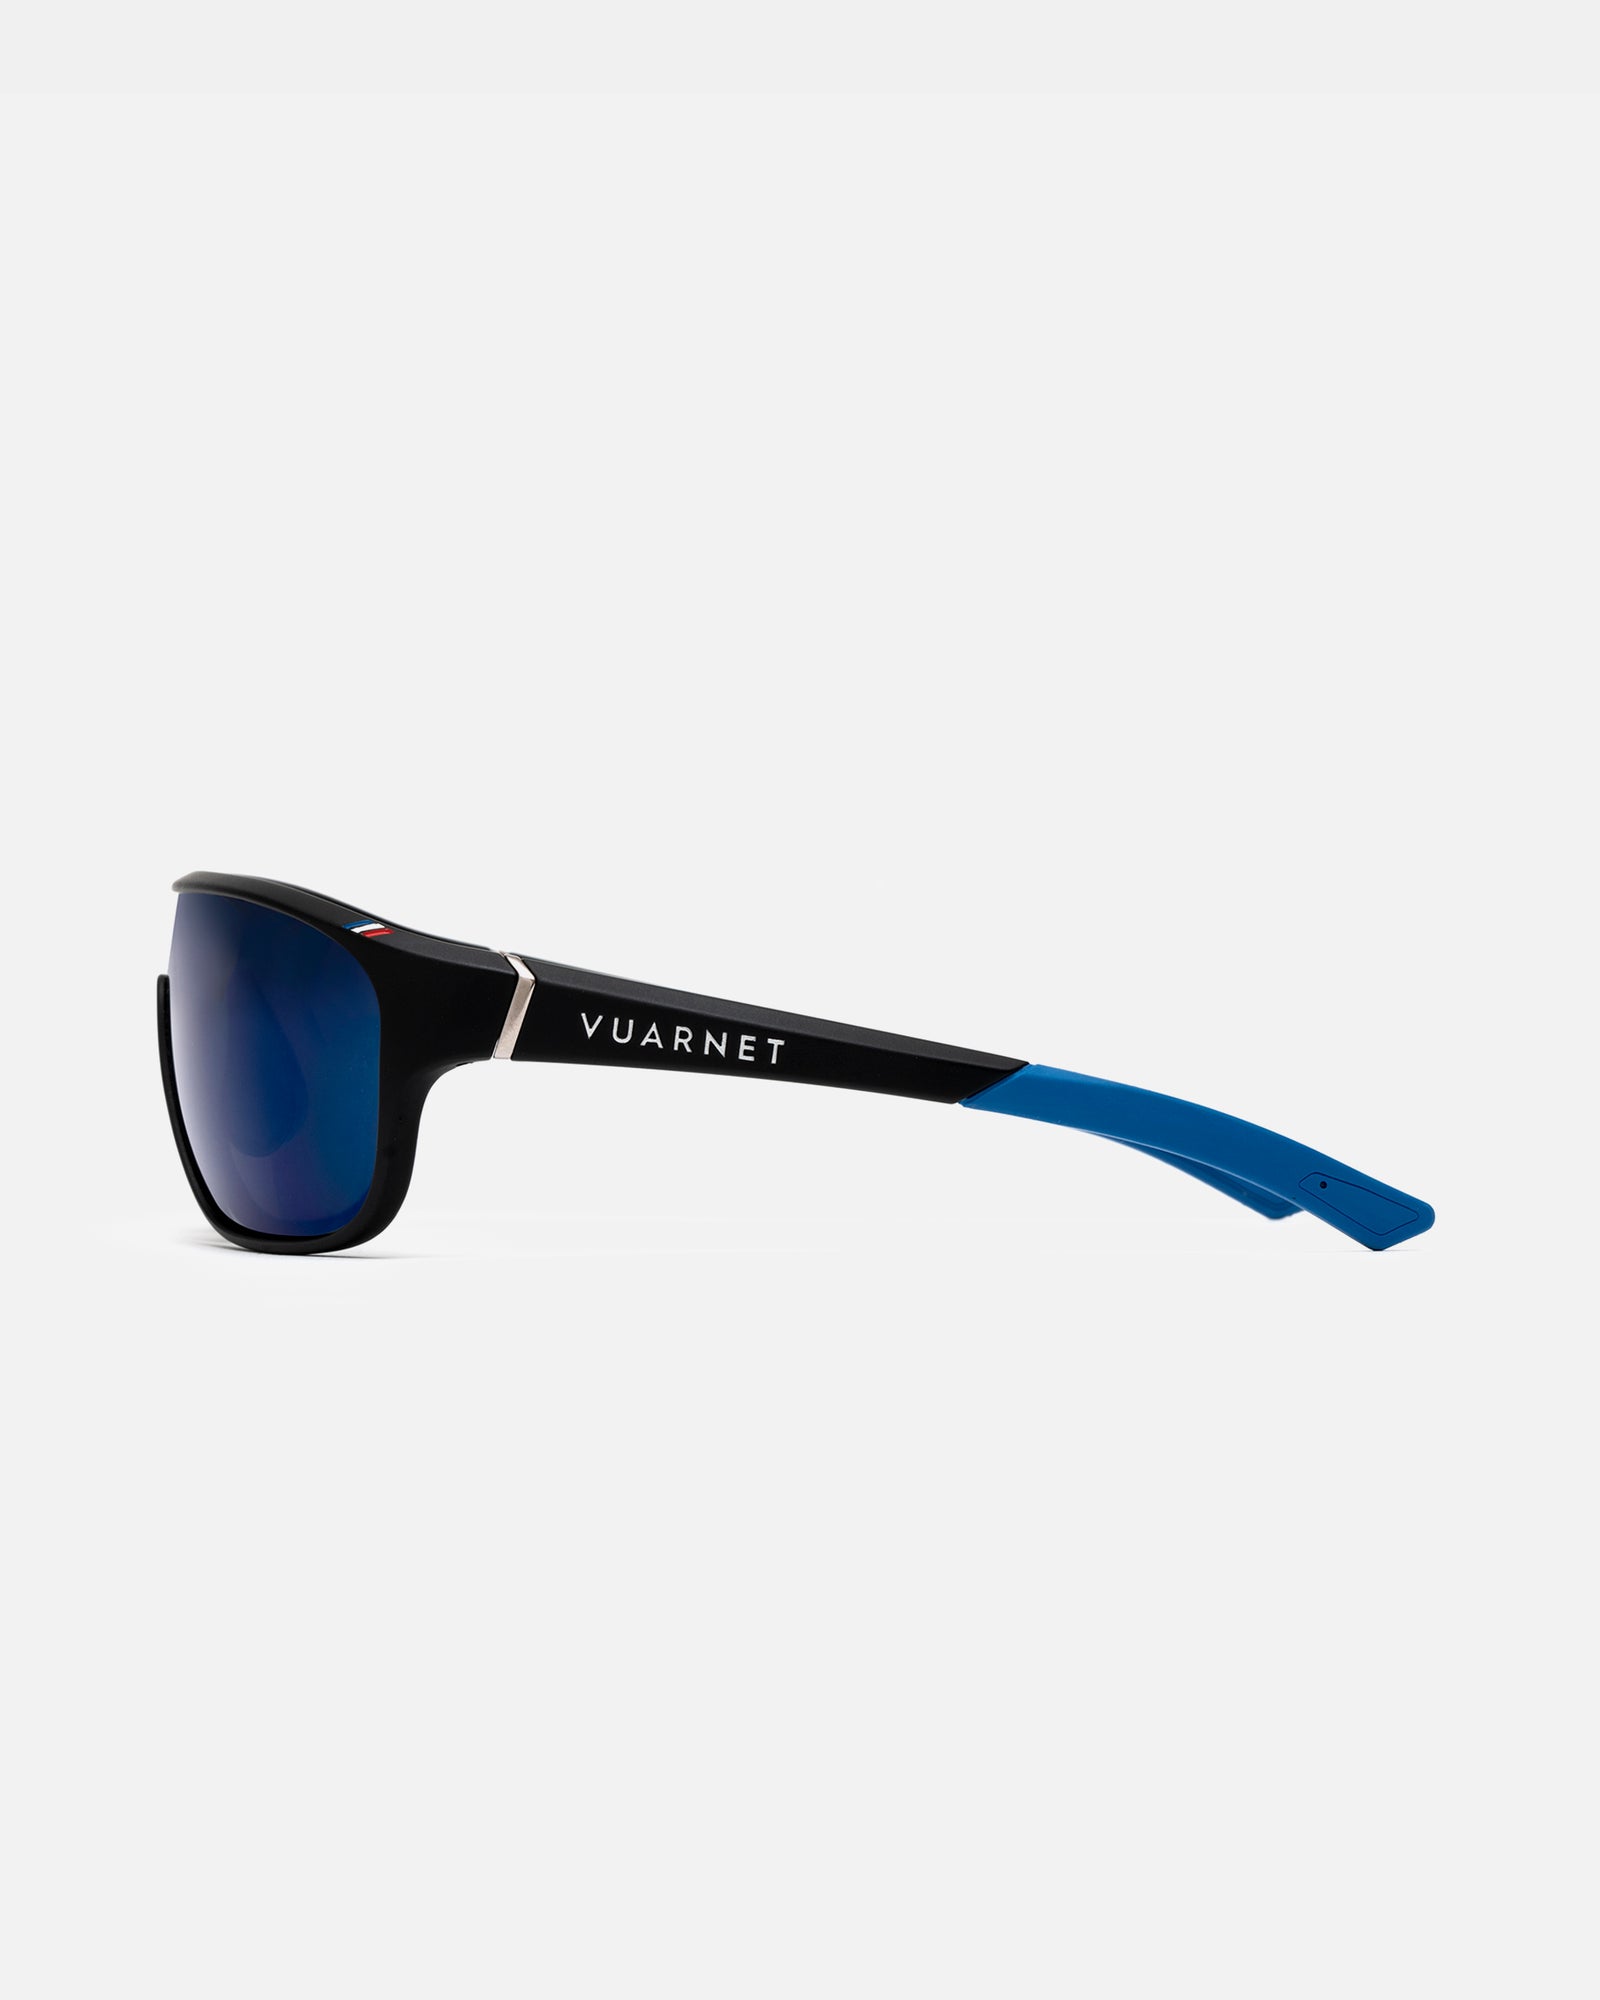 Vuarnet - 180° 1929 - Polar Blue Flash - Sunglasses